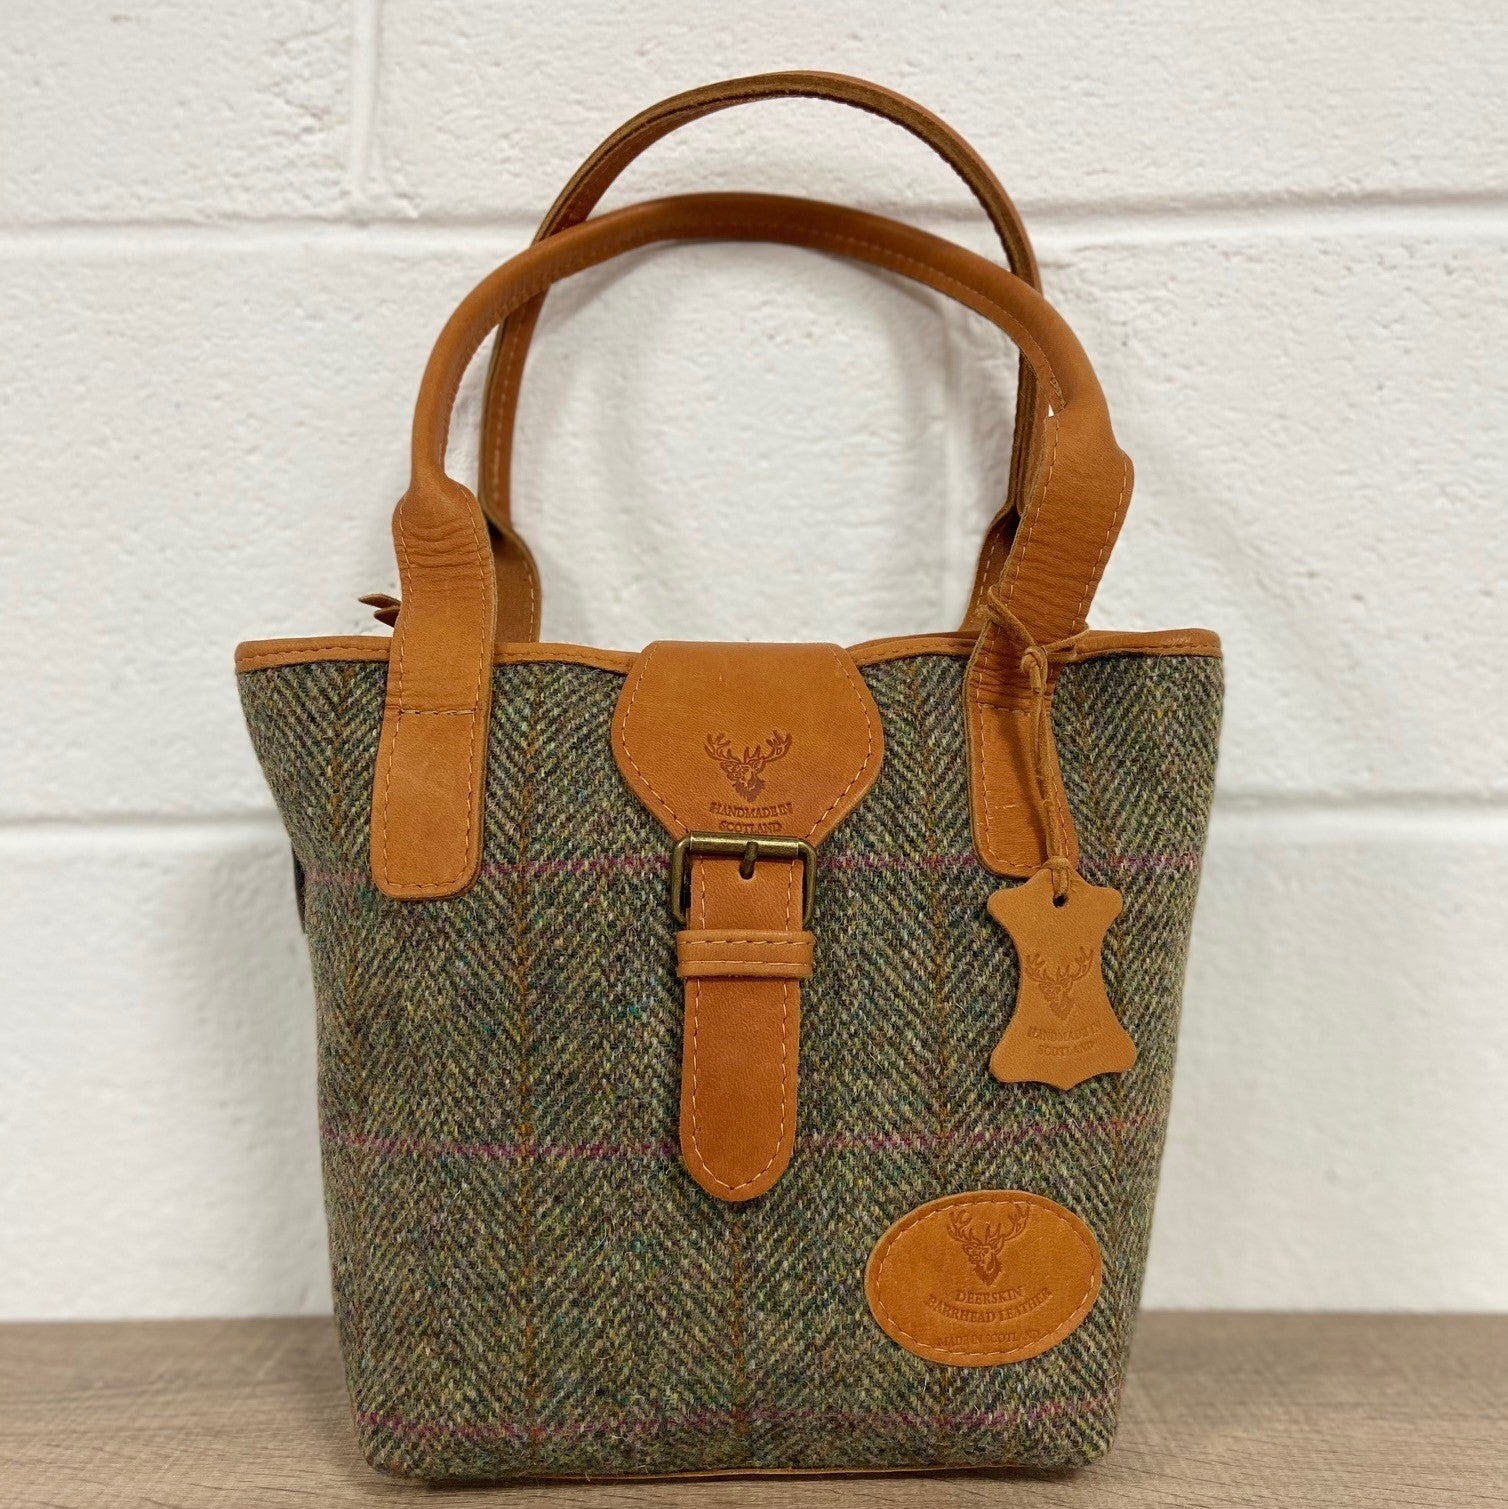 OLIVIA HARRIS LEATHER PURSE | Genuine leather purse, Purses, Leather purses